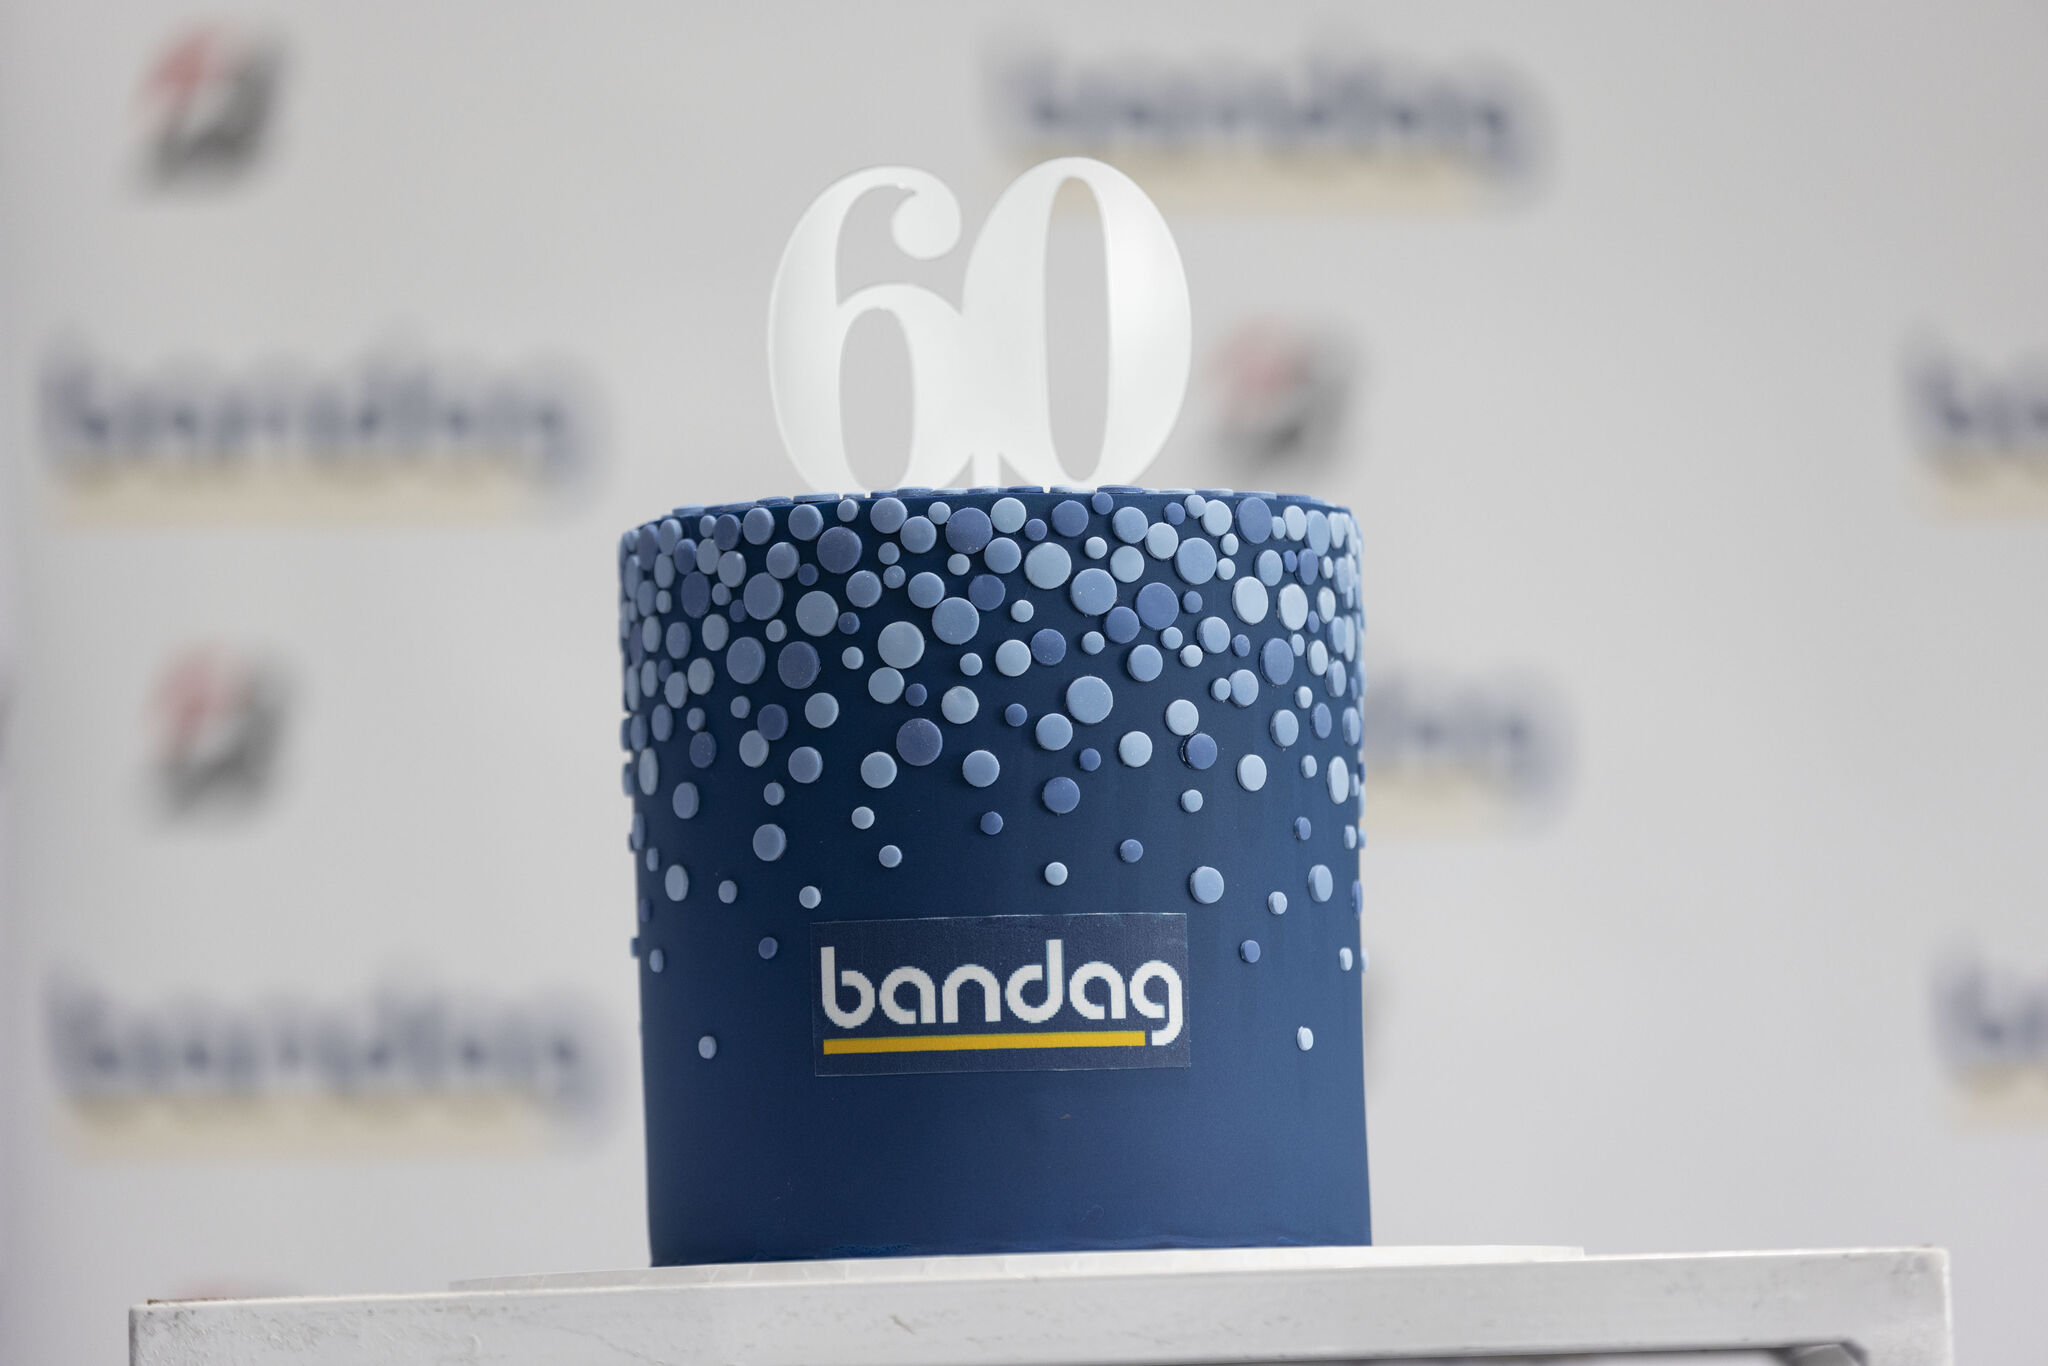 60 years of Bandag Retreading